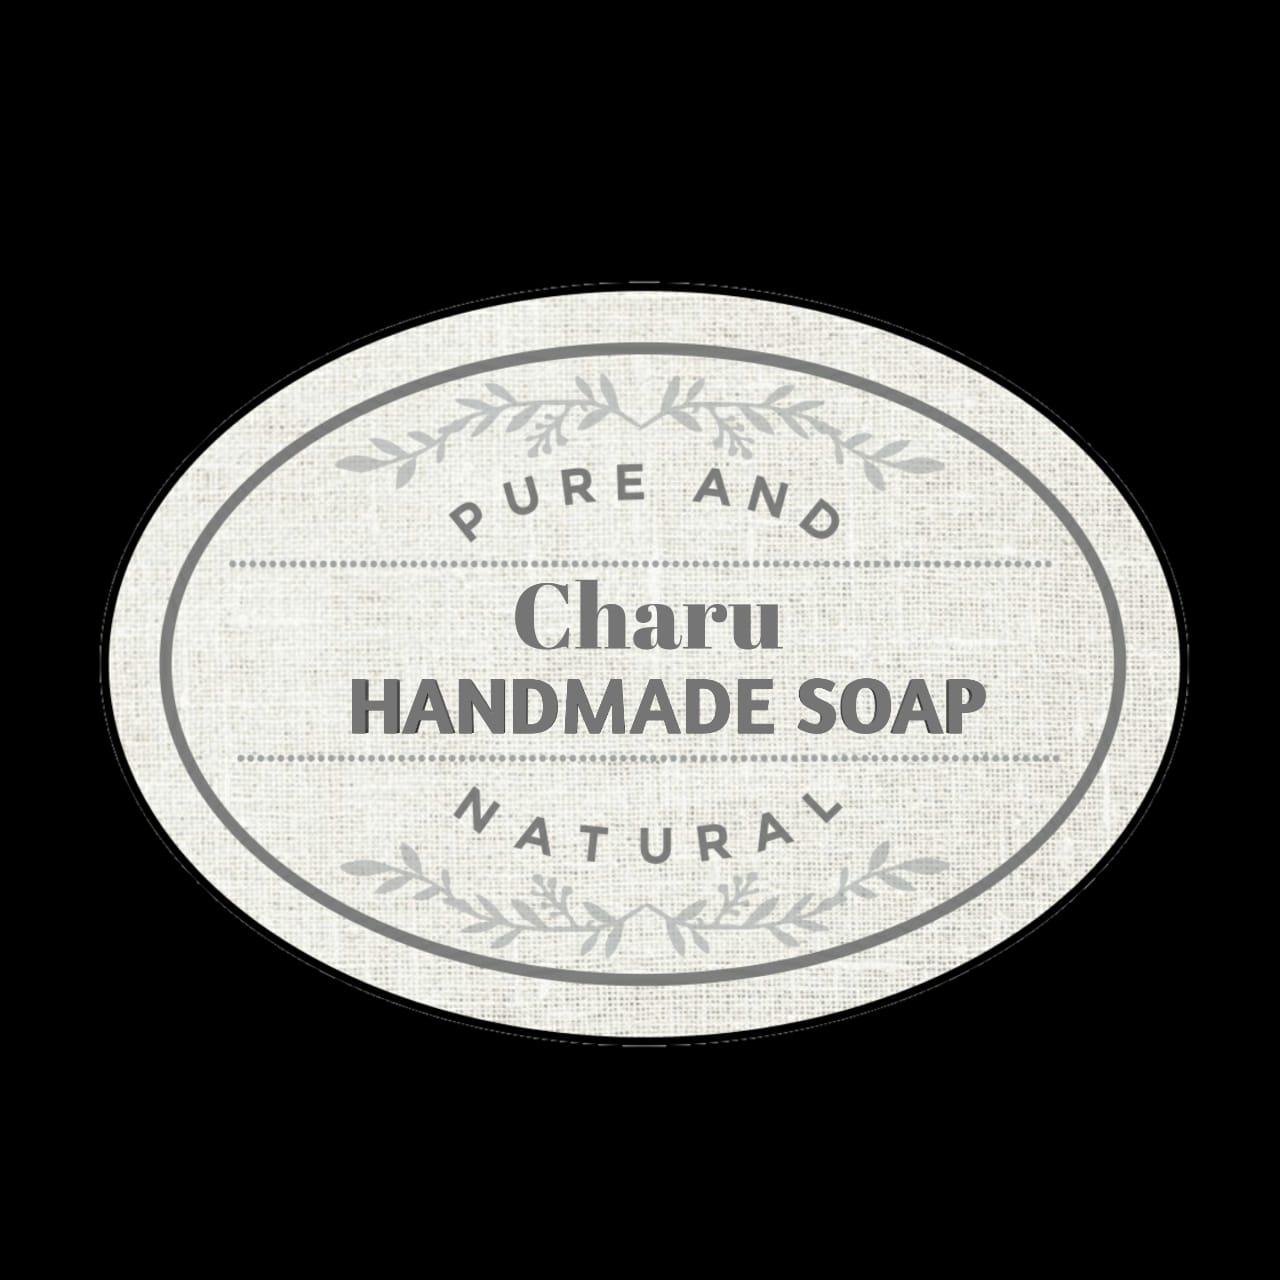 Charu Handmade Soap